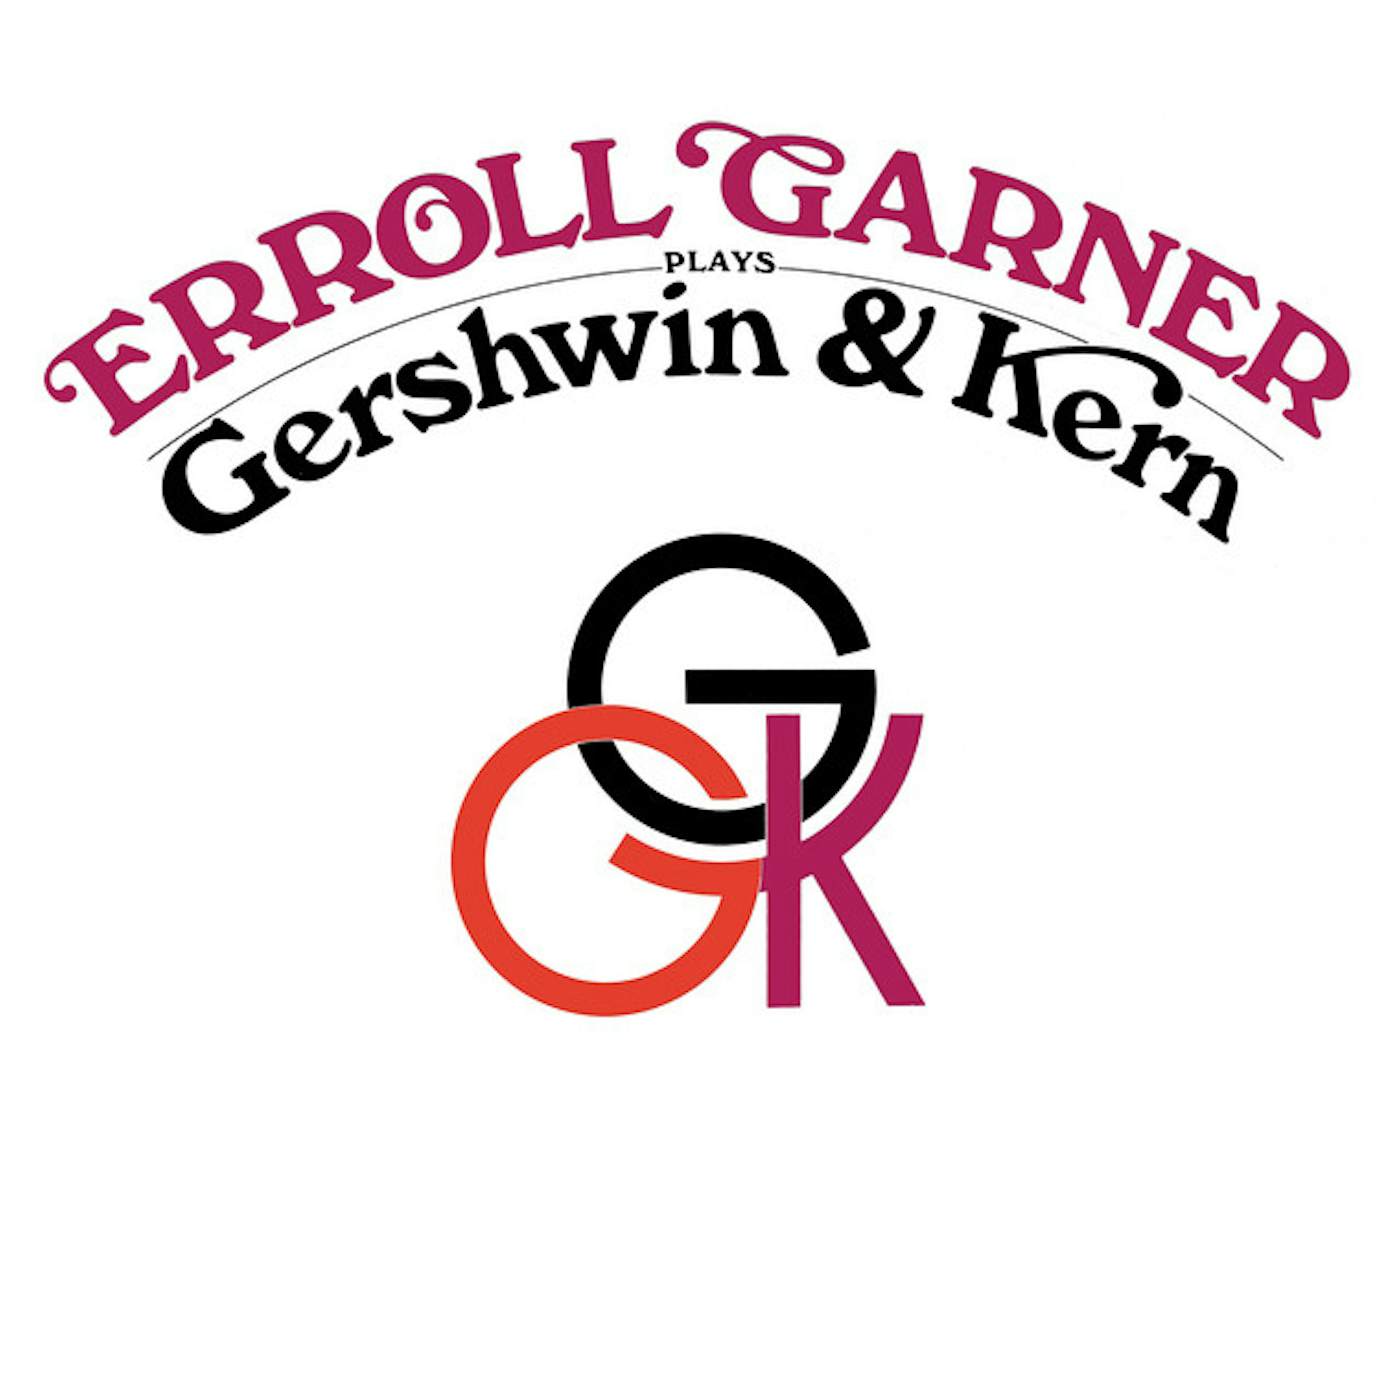 Erroll Garner GERSHWIN & KERN CD